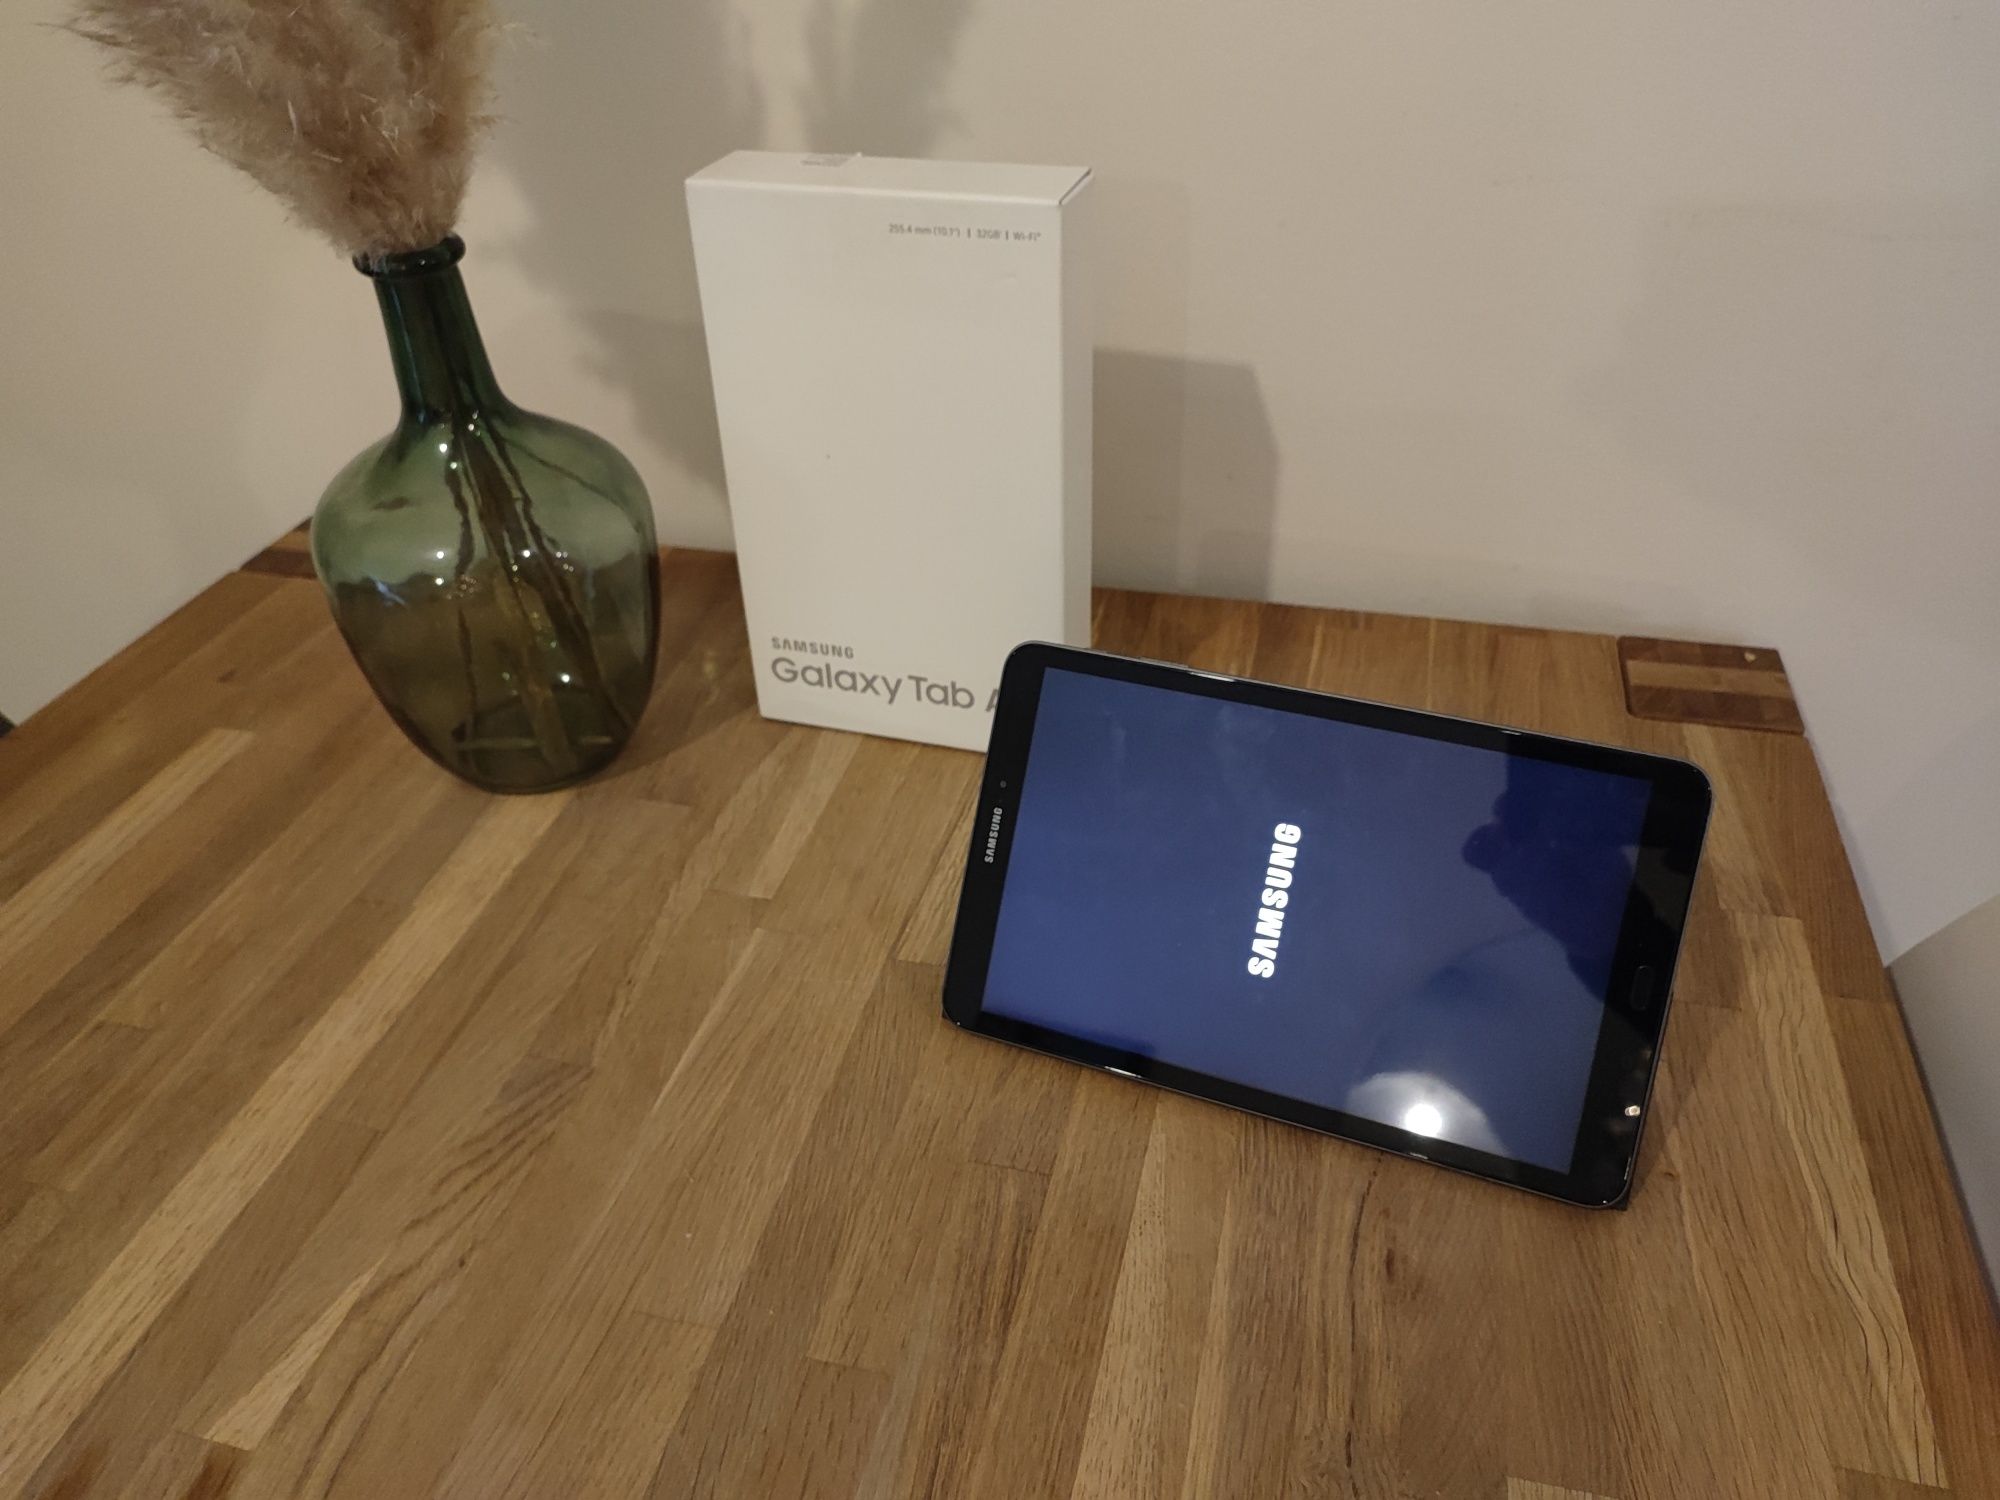 Samsung Galaxy Tab WiFi como novo